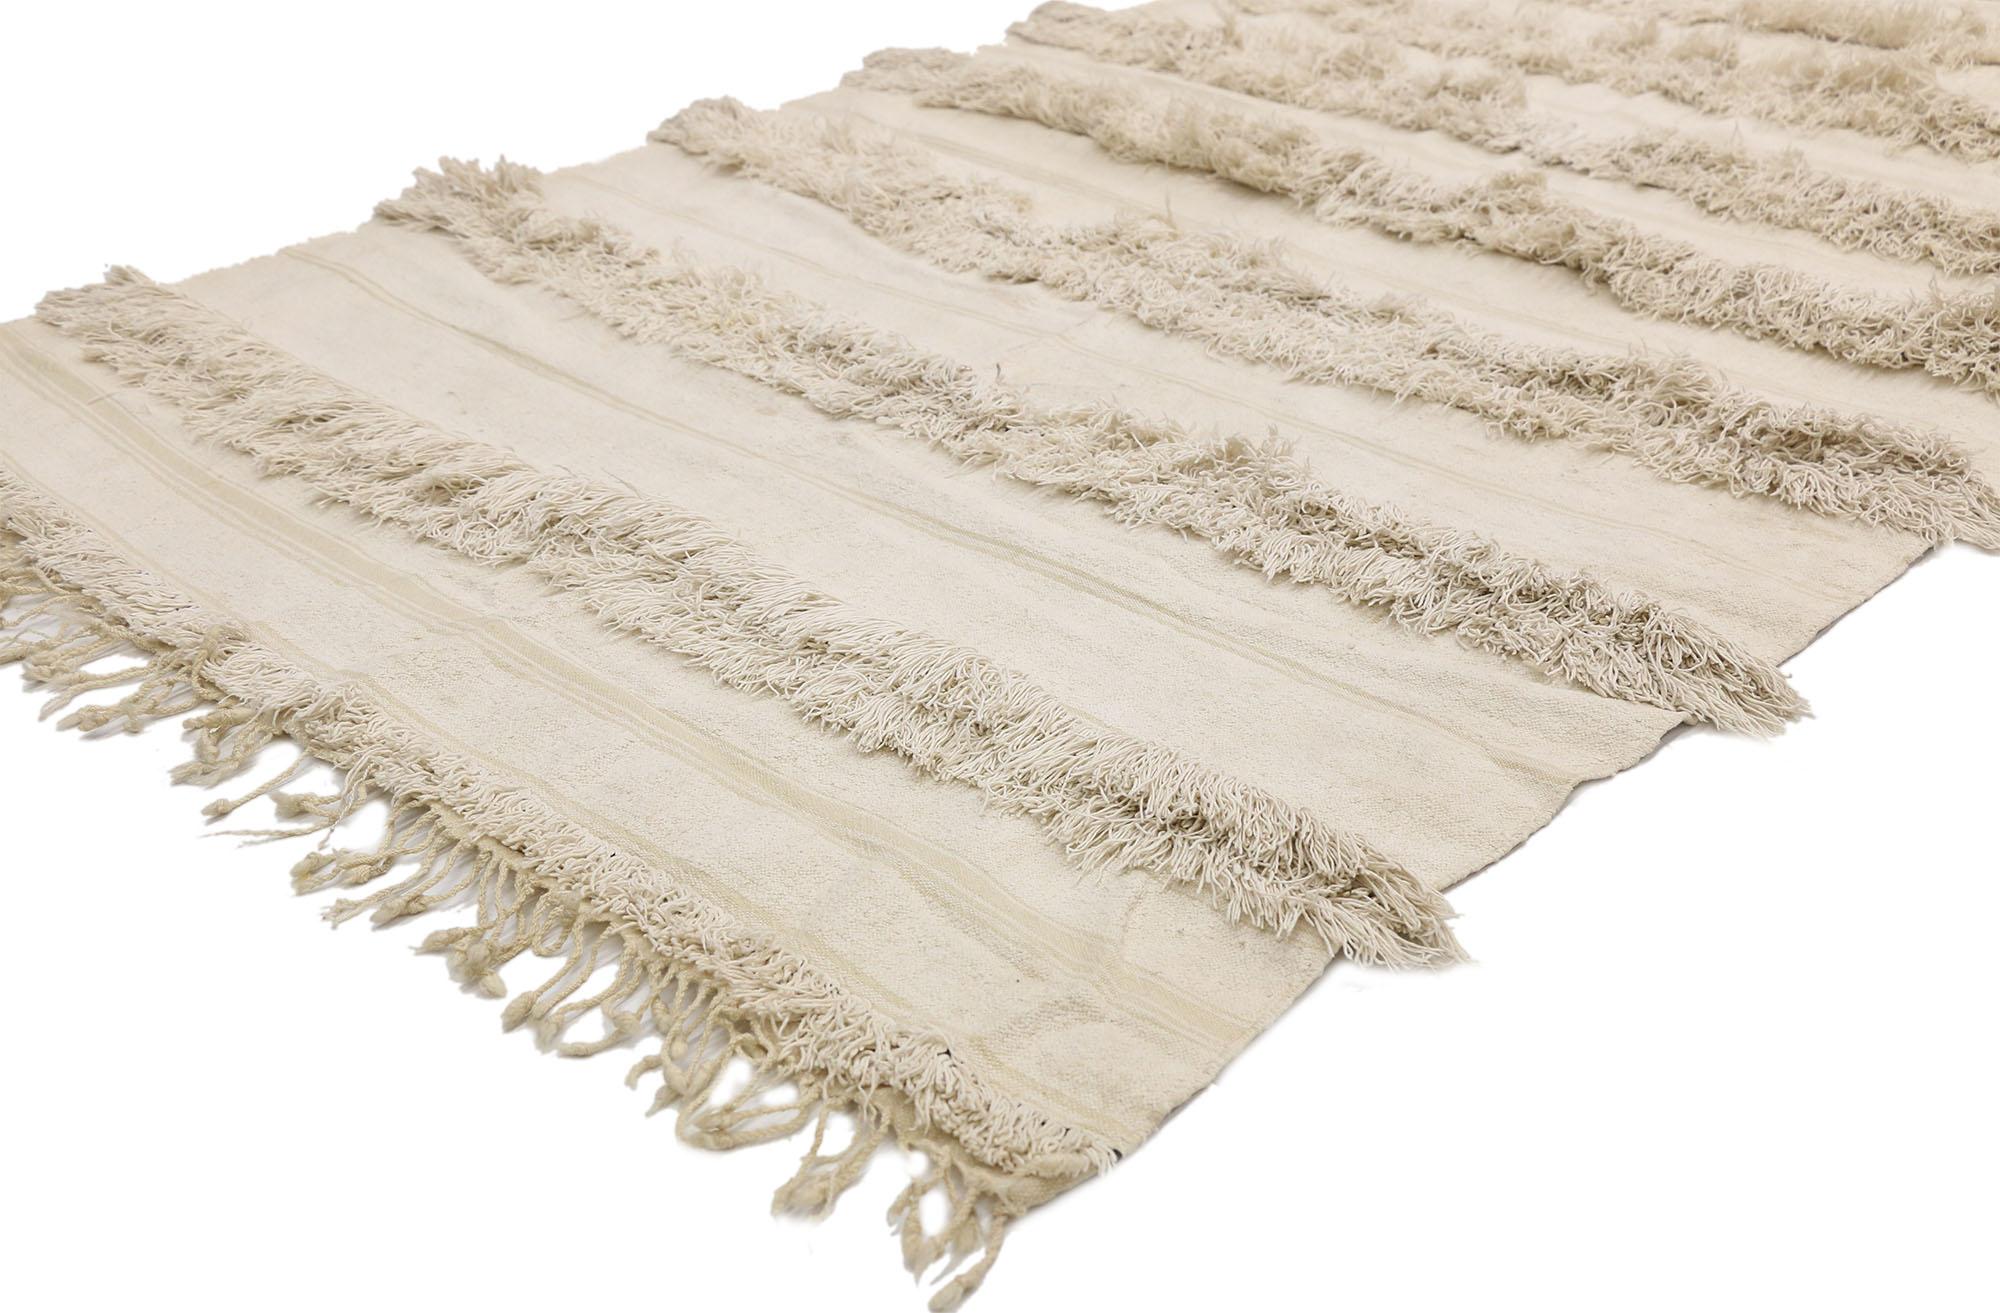 20820, vintage Moroccan wedding blanket, Berber Handira Tamizart. This handwoven wool vintage Moroccan wedding blanket also known as a Berber Handira features rows of fluffy fringe. The underside of this vintage Handira blanket displays kilim bands